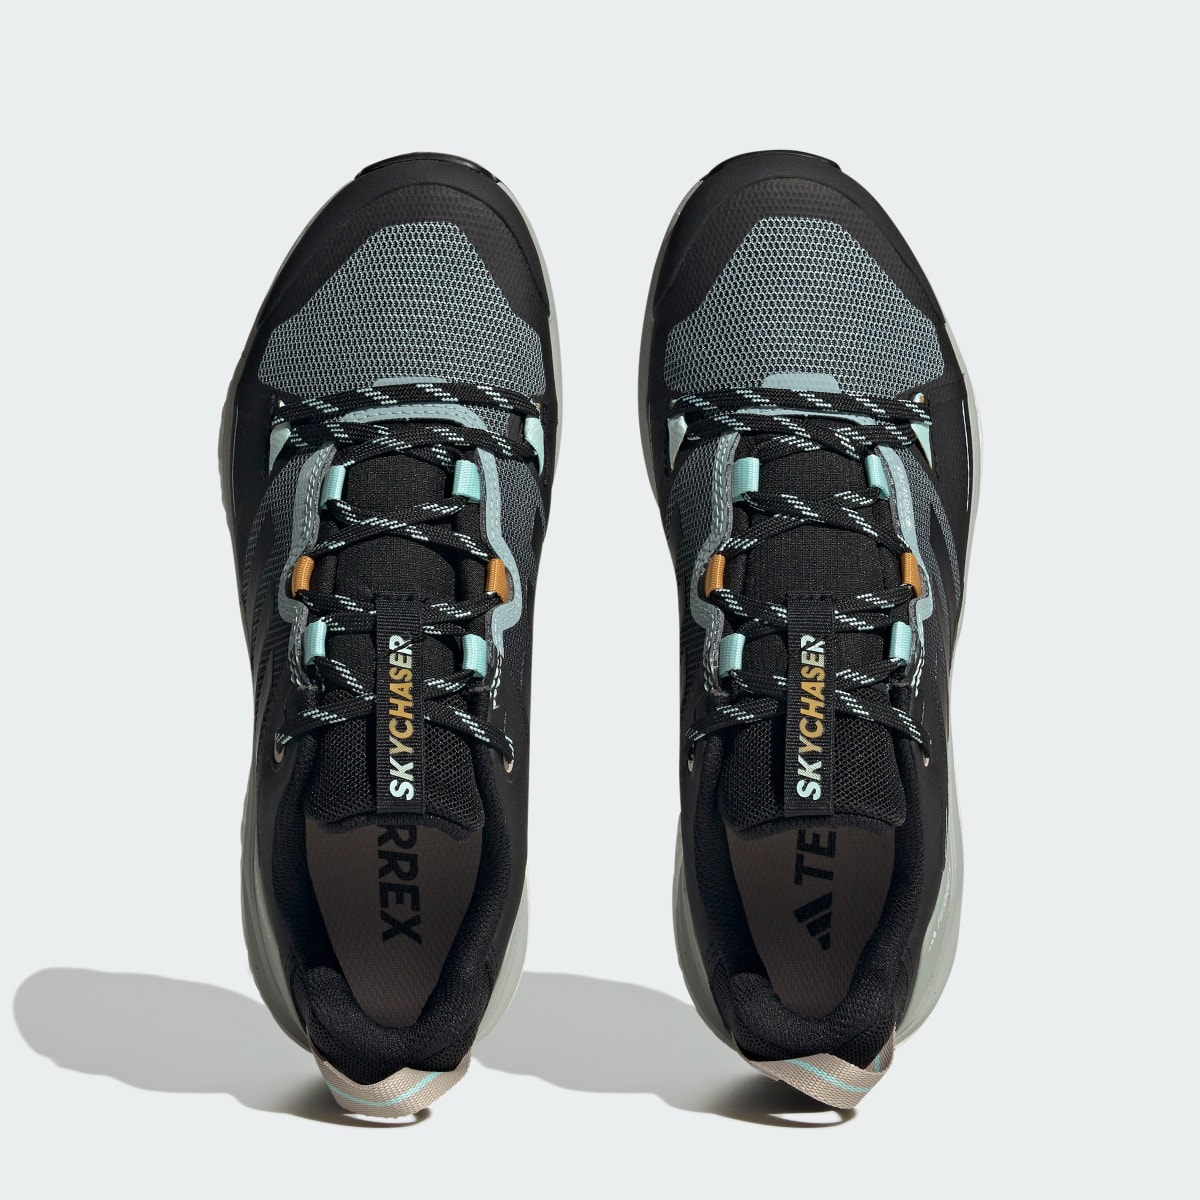 Adidas Sapatilhas de Caminhada GORE-TEX Skychaser 2.0 TERREX. 6